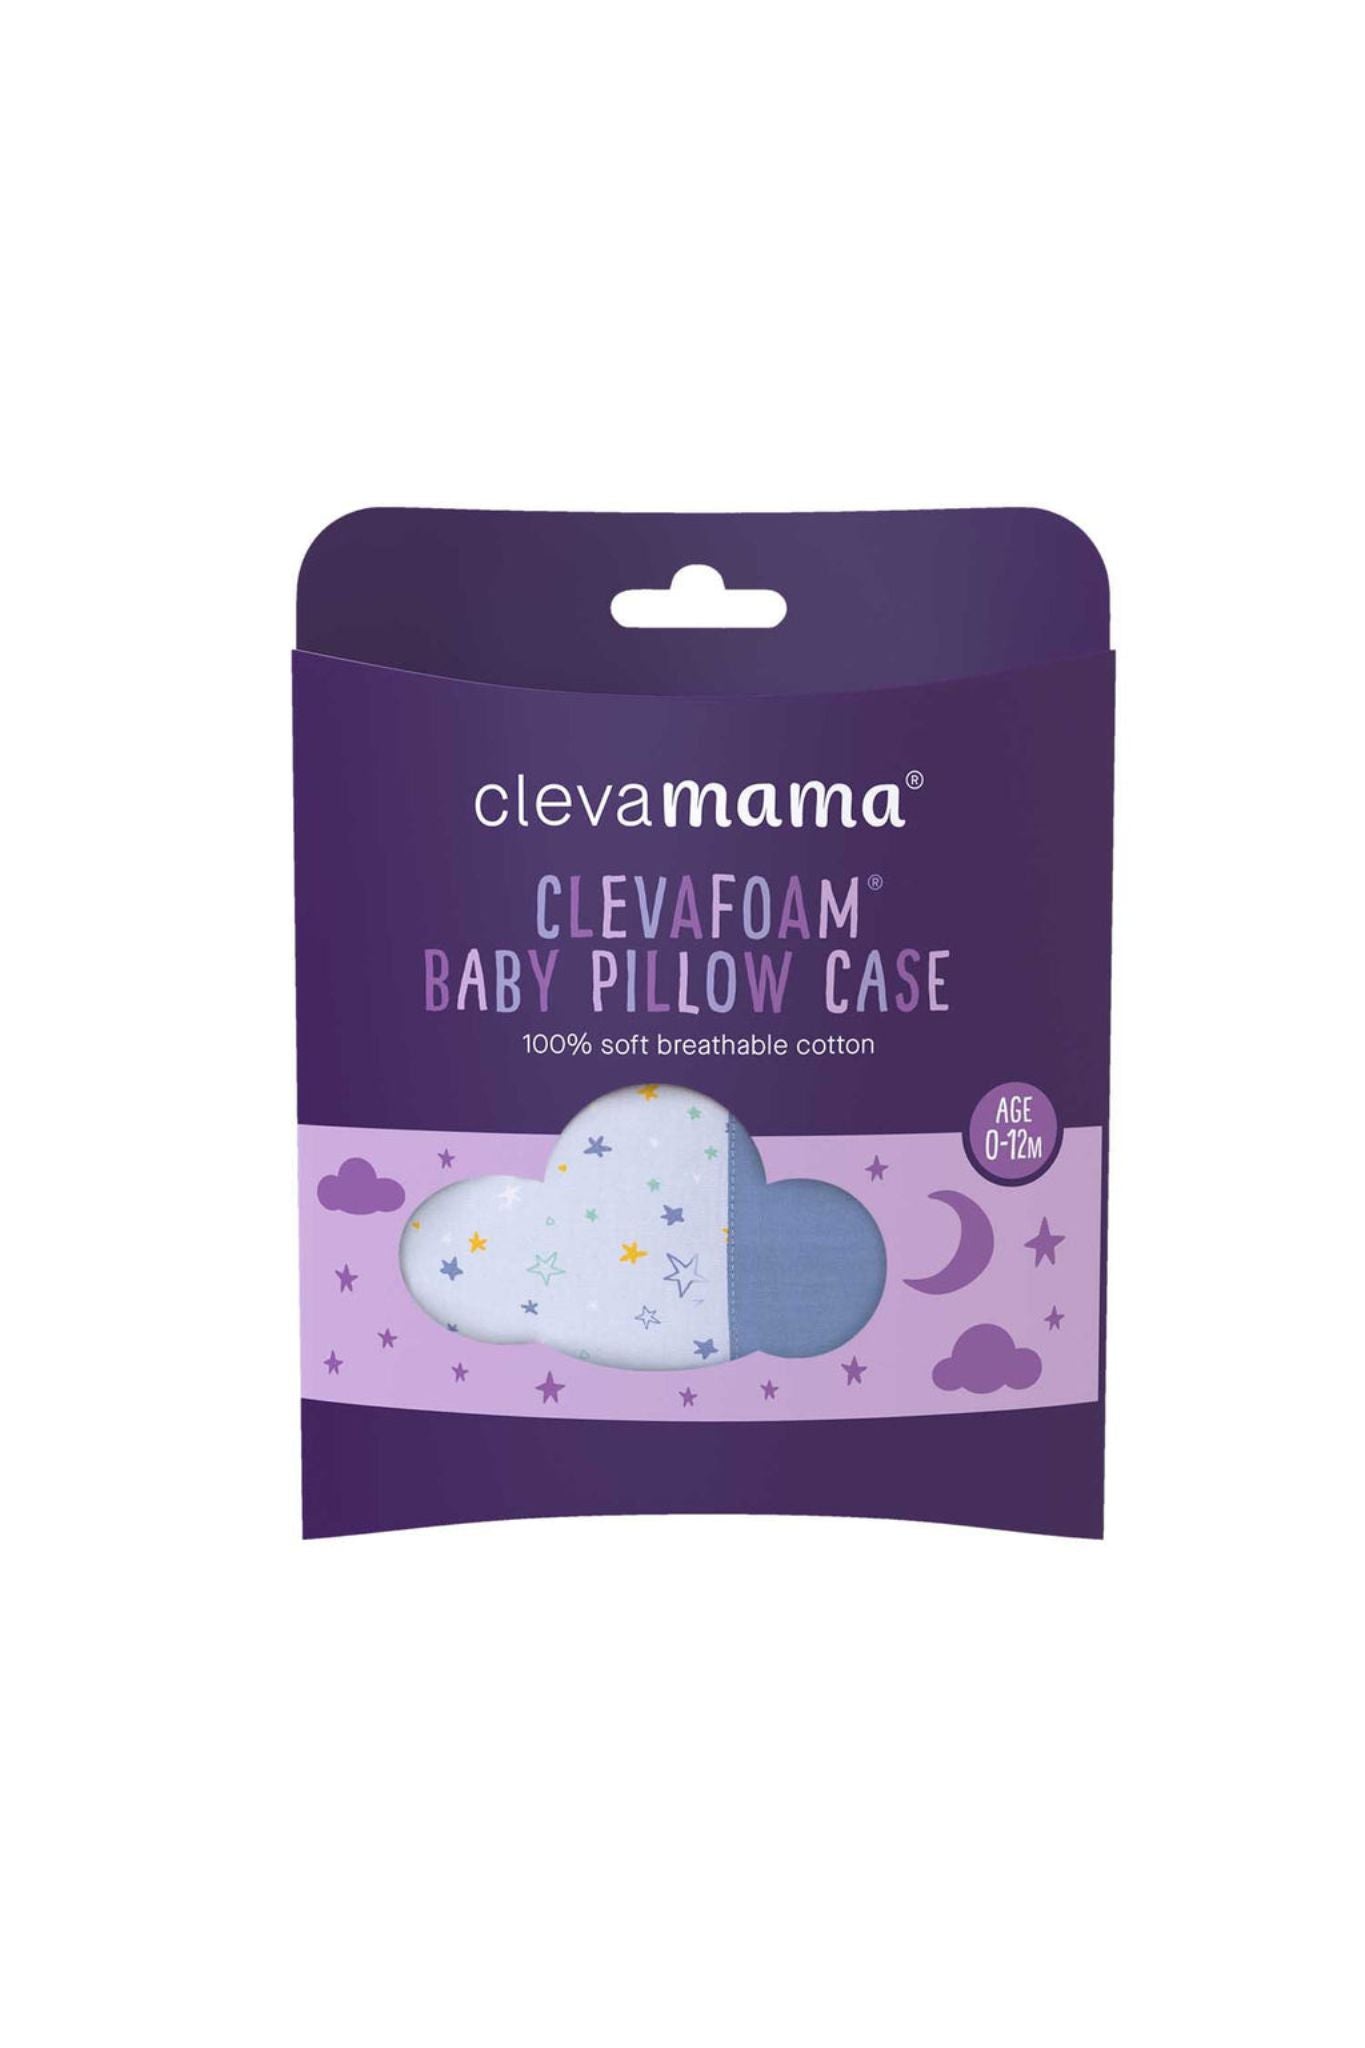 Clevamama Baby Pillowcase